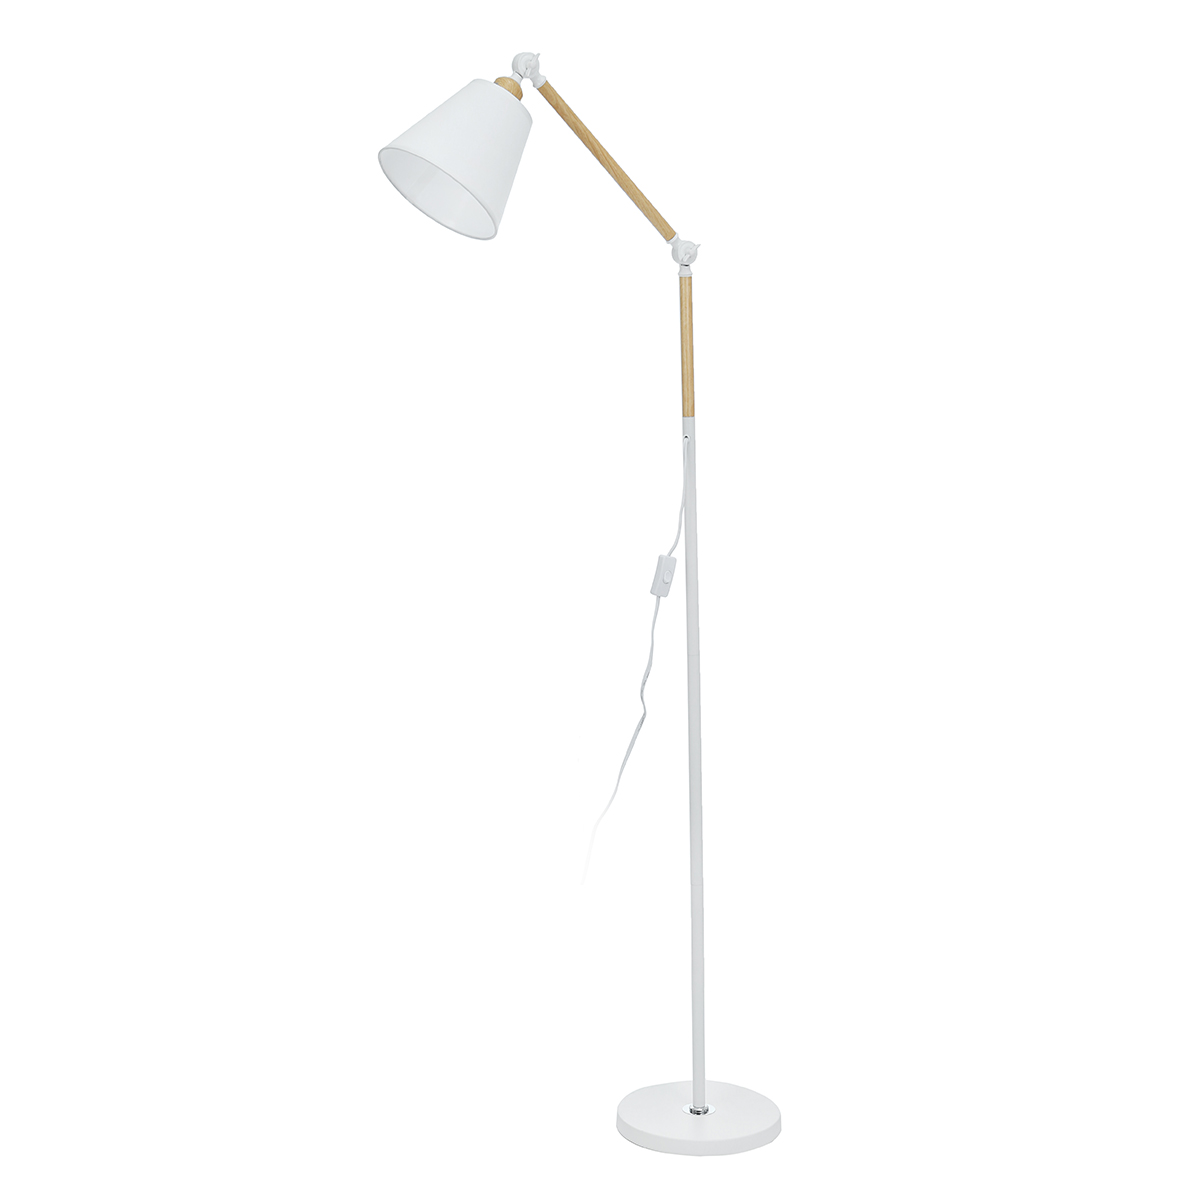 Find 85V 265V Modern Floor Light Wooden Iron Hanging Lamp For Shop Restaurant Bar for Sale on Gipsybee.com with cryptocurrencies